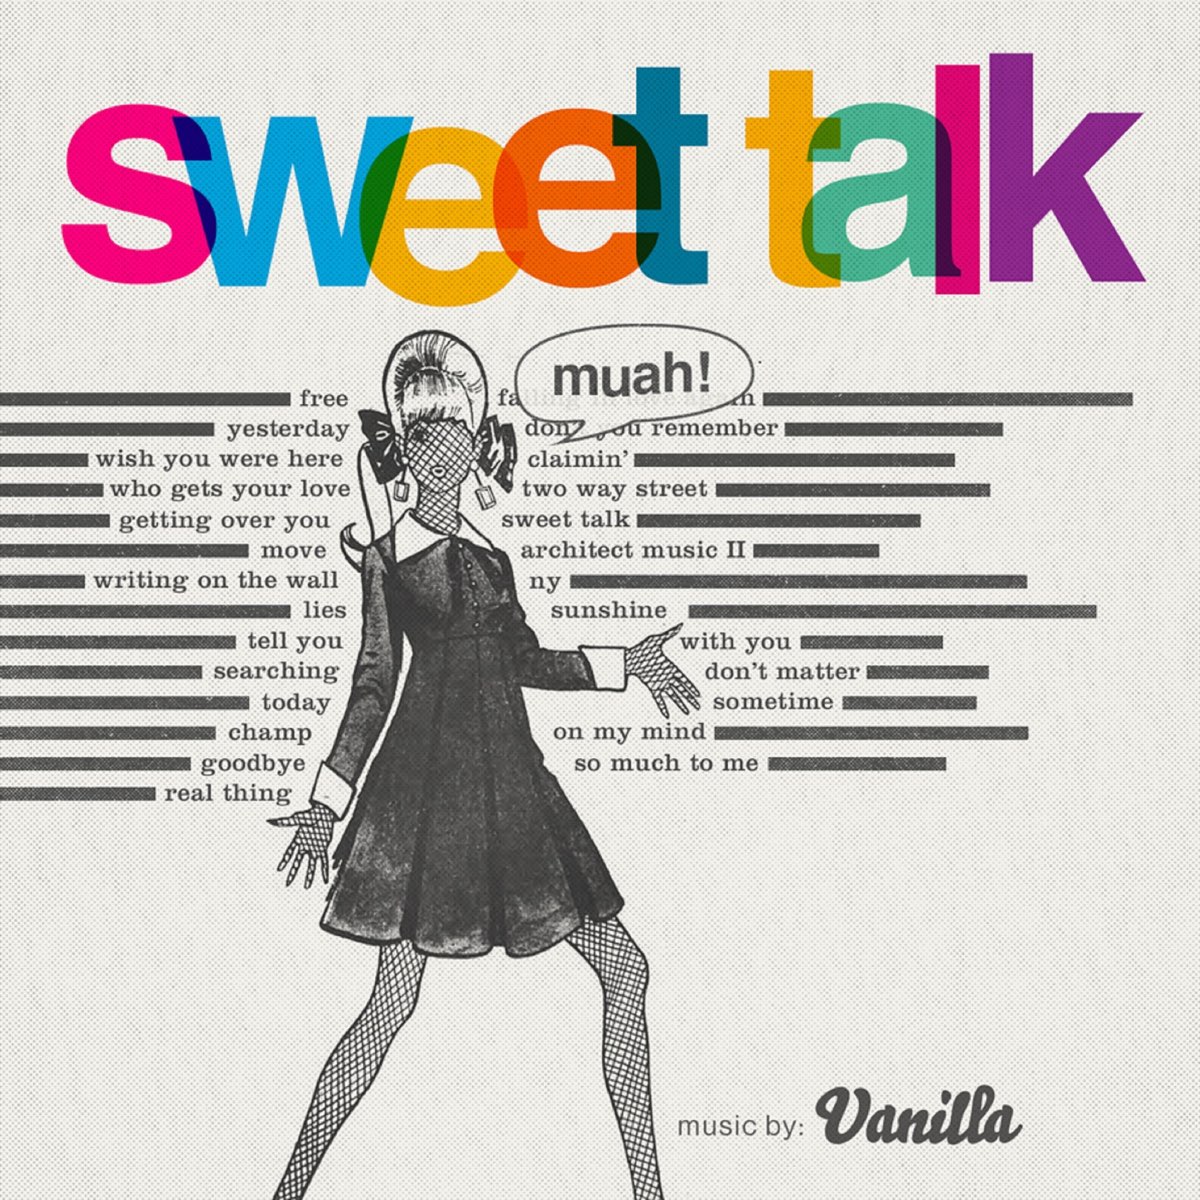 Sweet Talk by Vanilla.